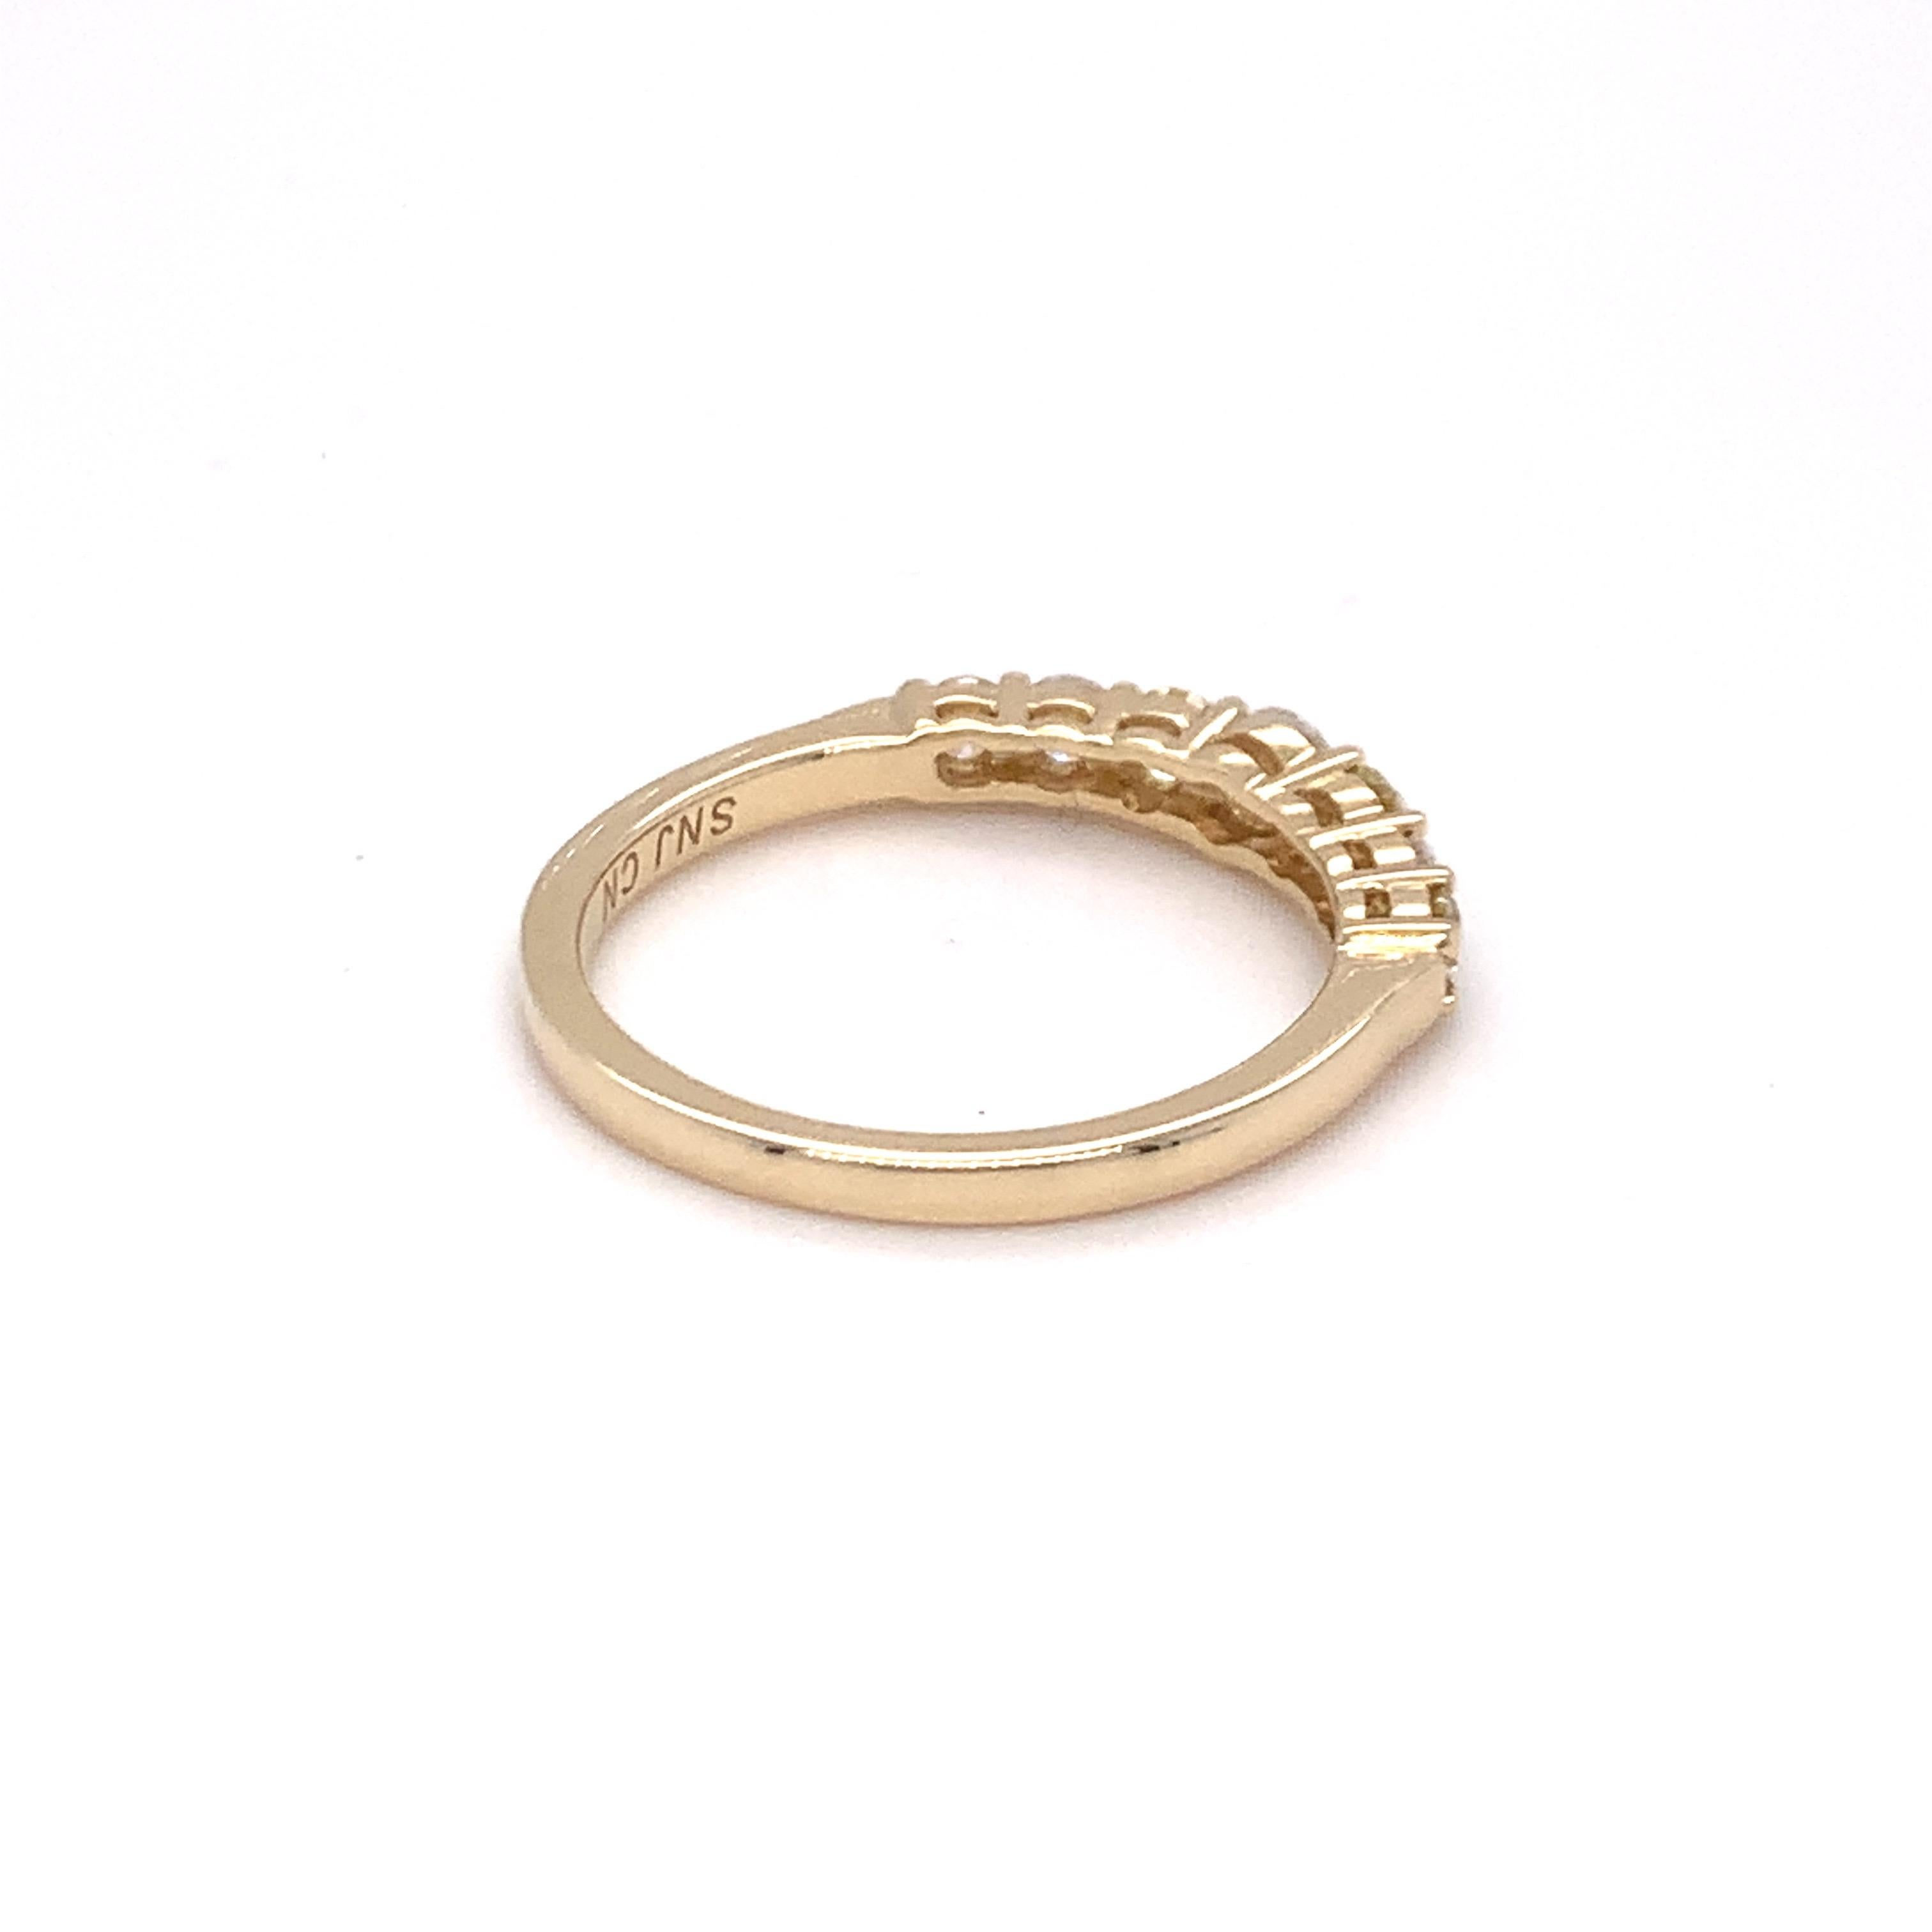 Brilliant Cut 0.45 Carat Yellow & White Diamond Band Ring in 14k Yellow Gold